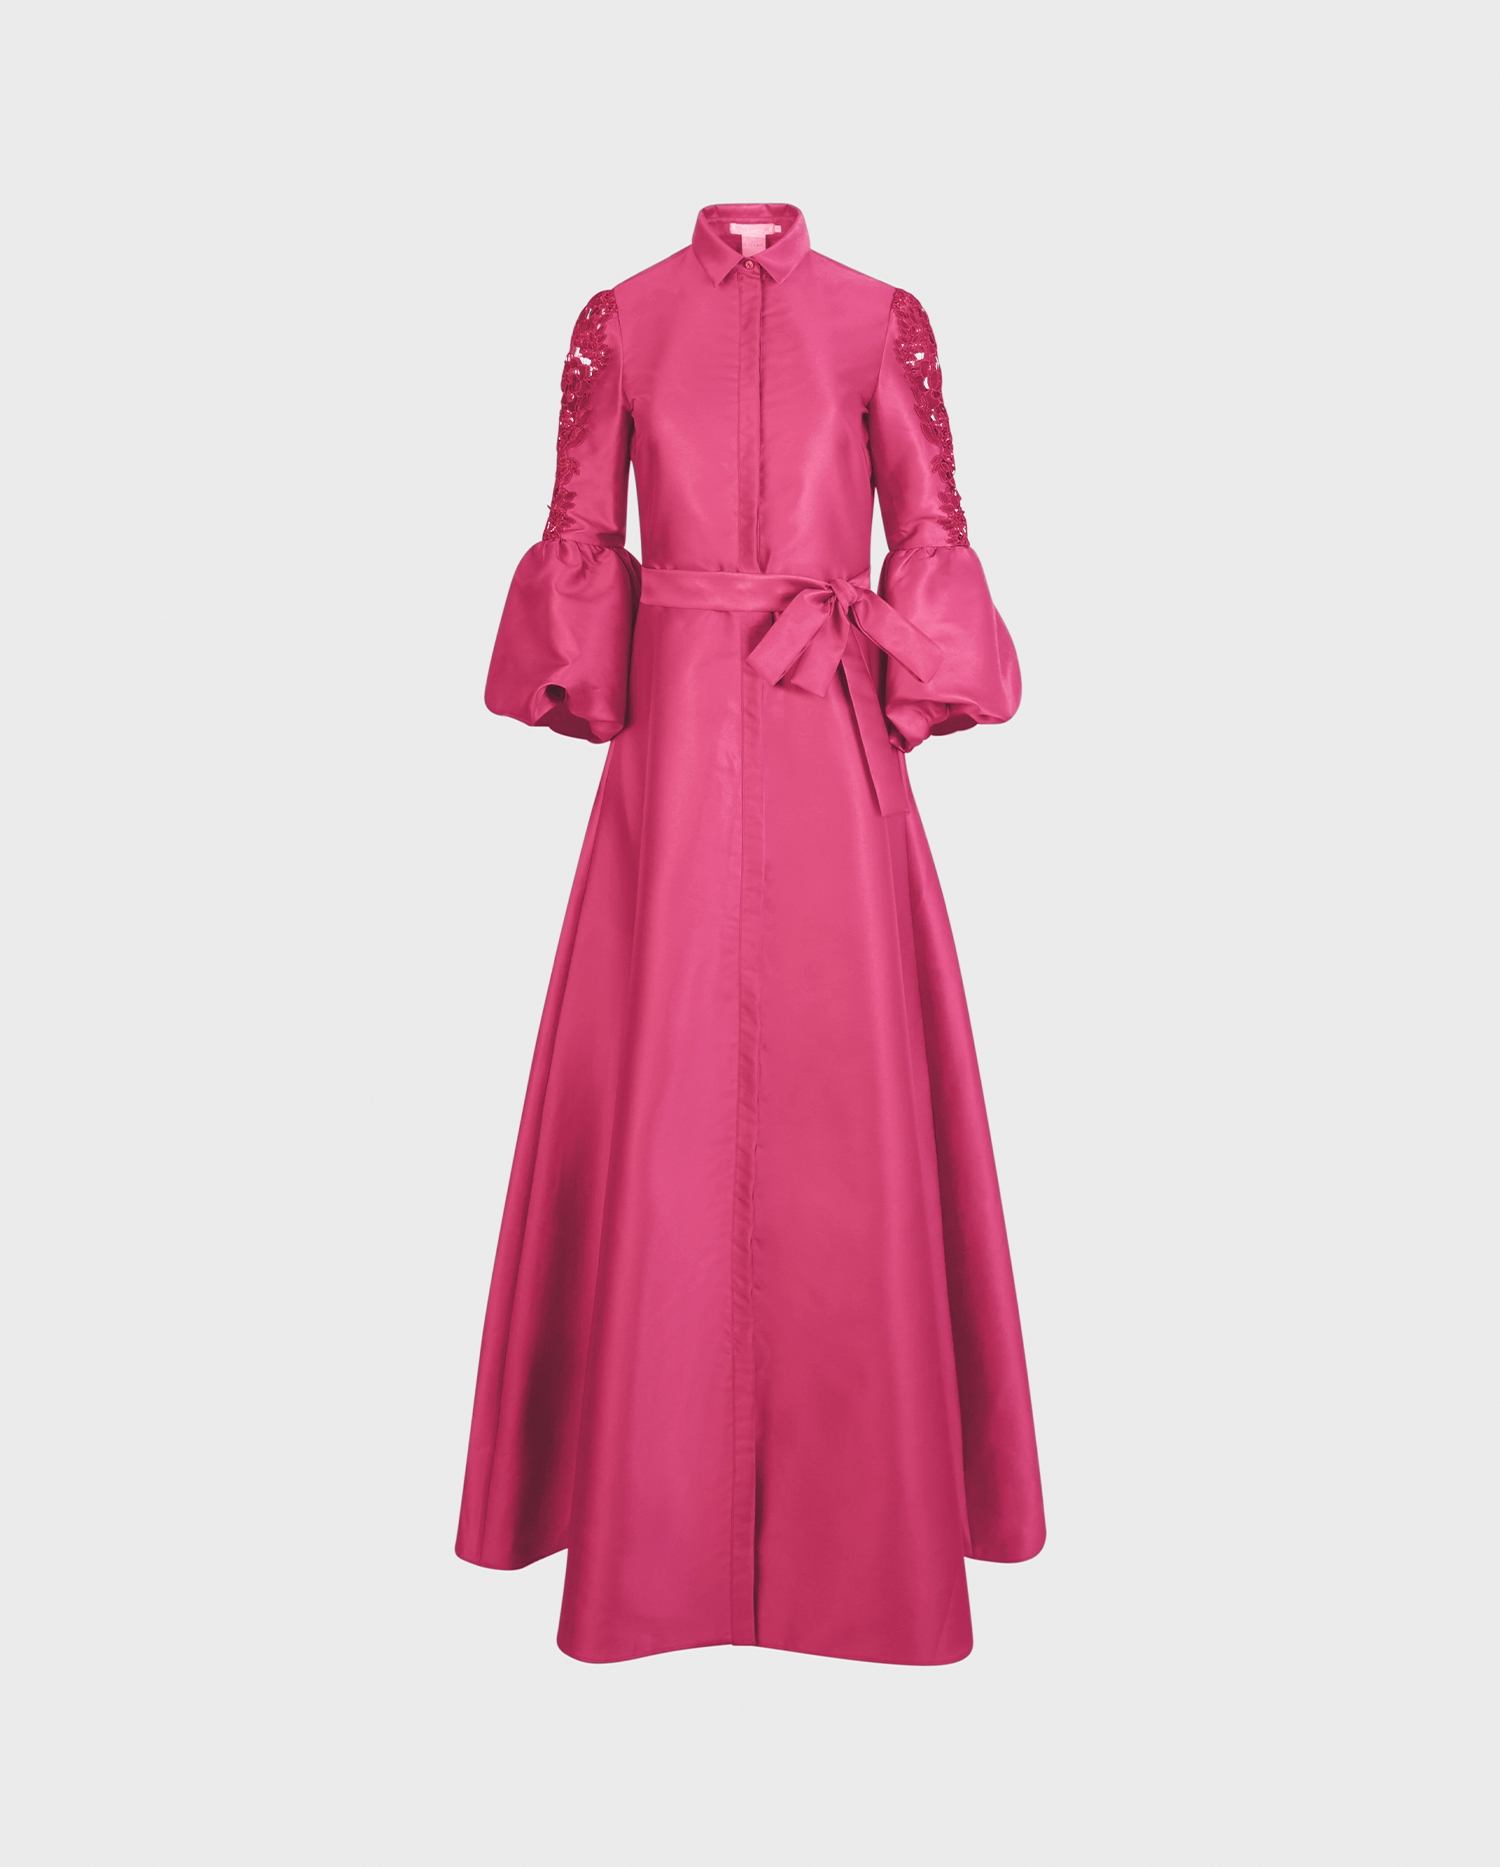 Shop the COMTESSE Dress from Parisian Designer Anne Fontaine